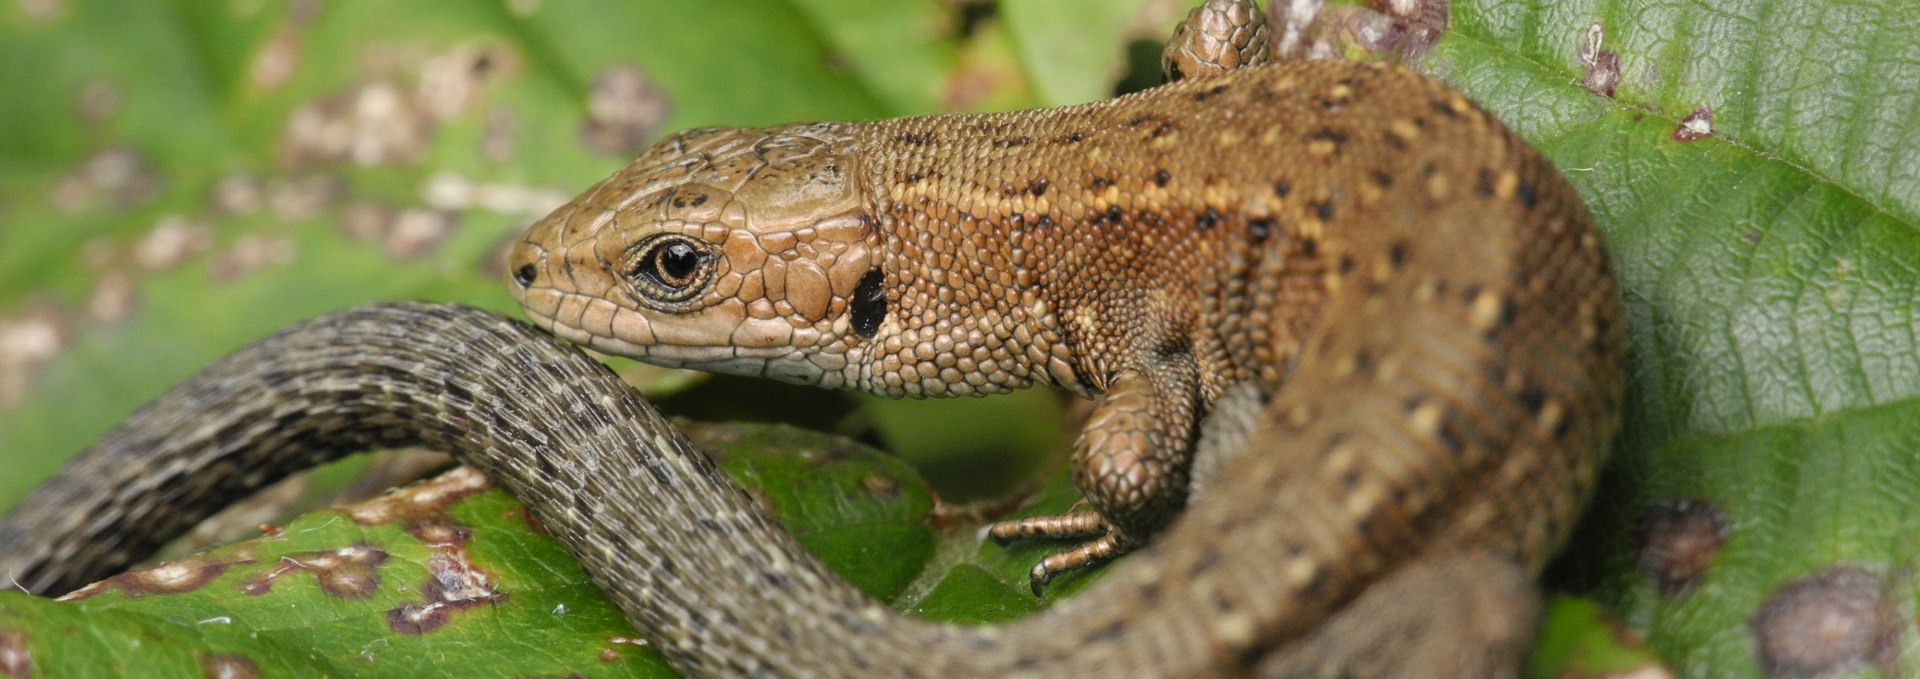 Bog lizard, © Infozentrum Wald & Moor Neuheide